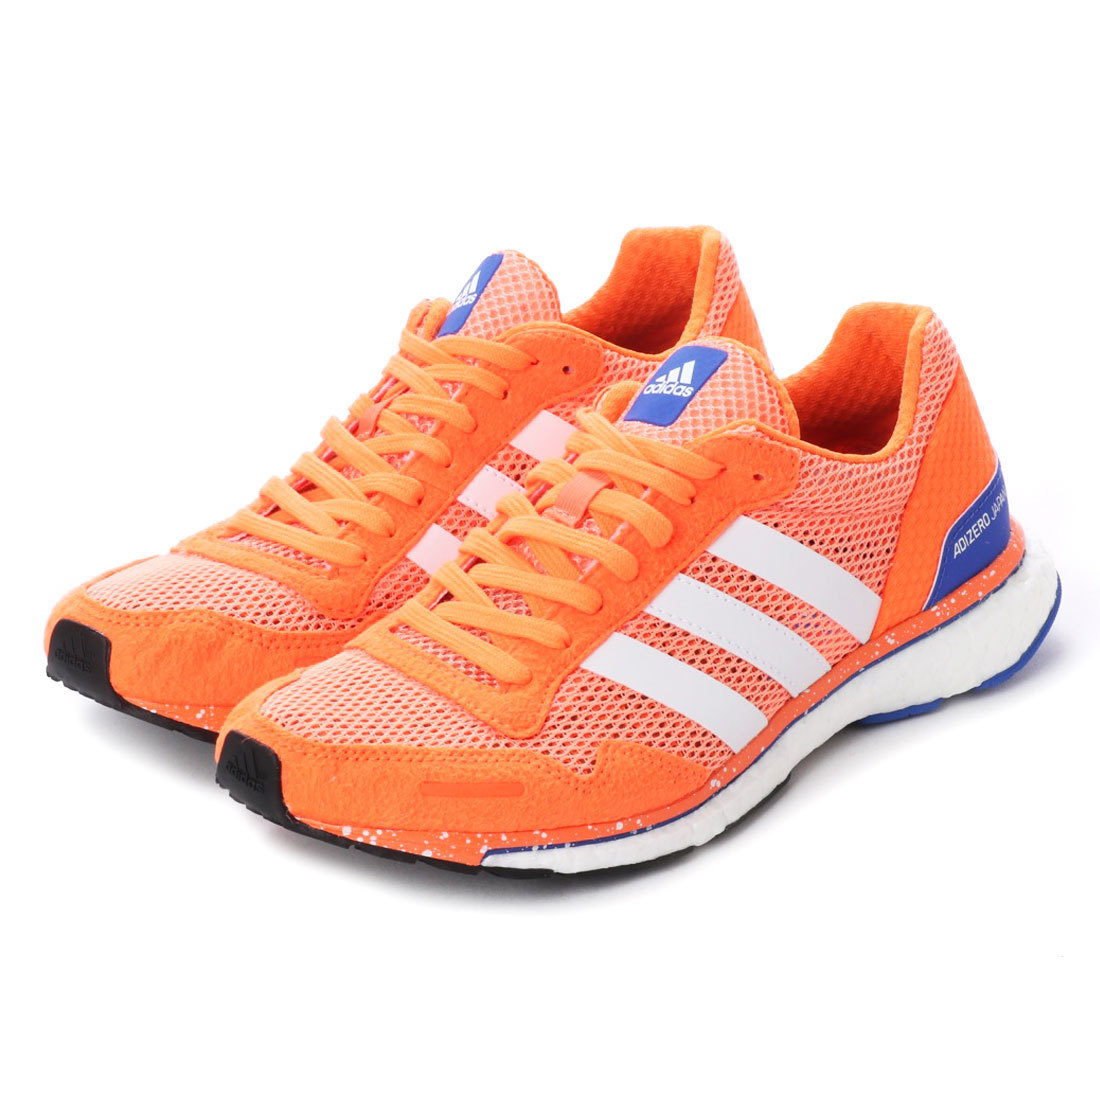 #*adidas бег обувь adizero Japan boost 3 W флуоресценция orange новый товар!*#